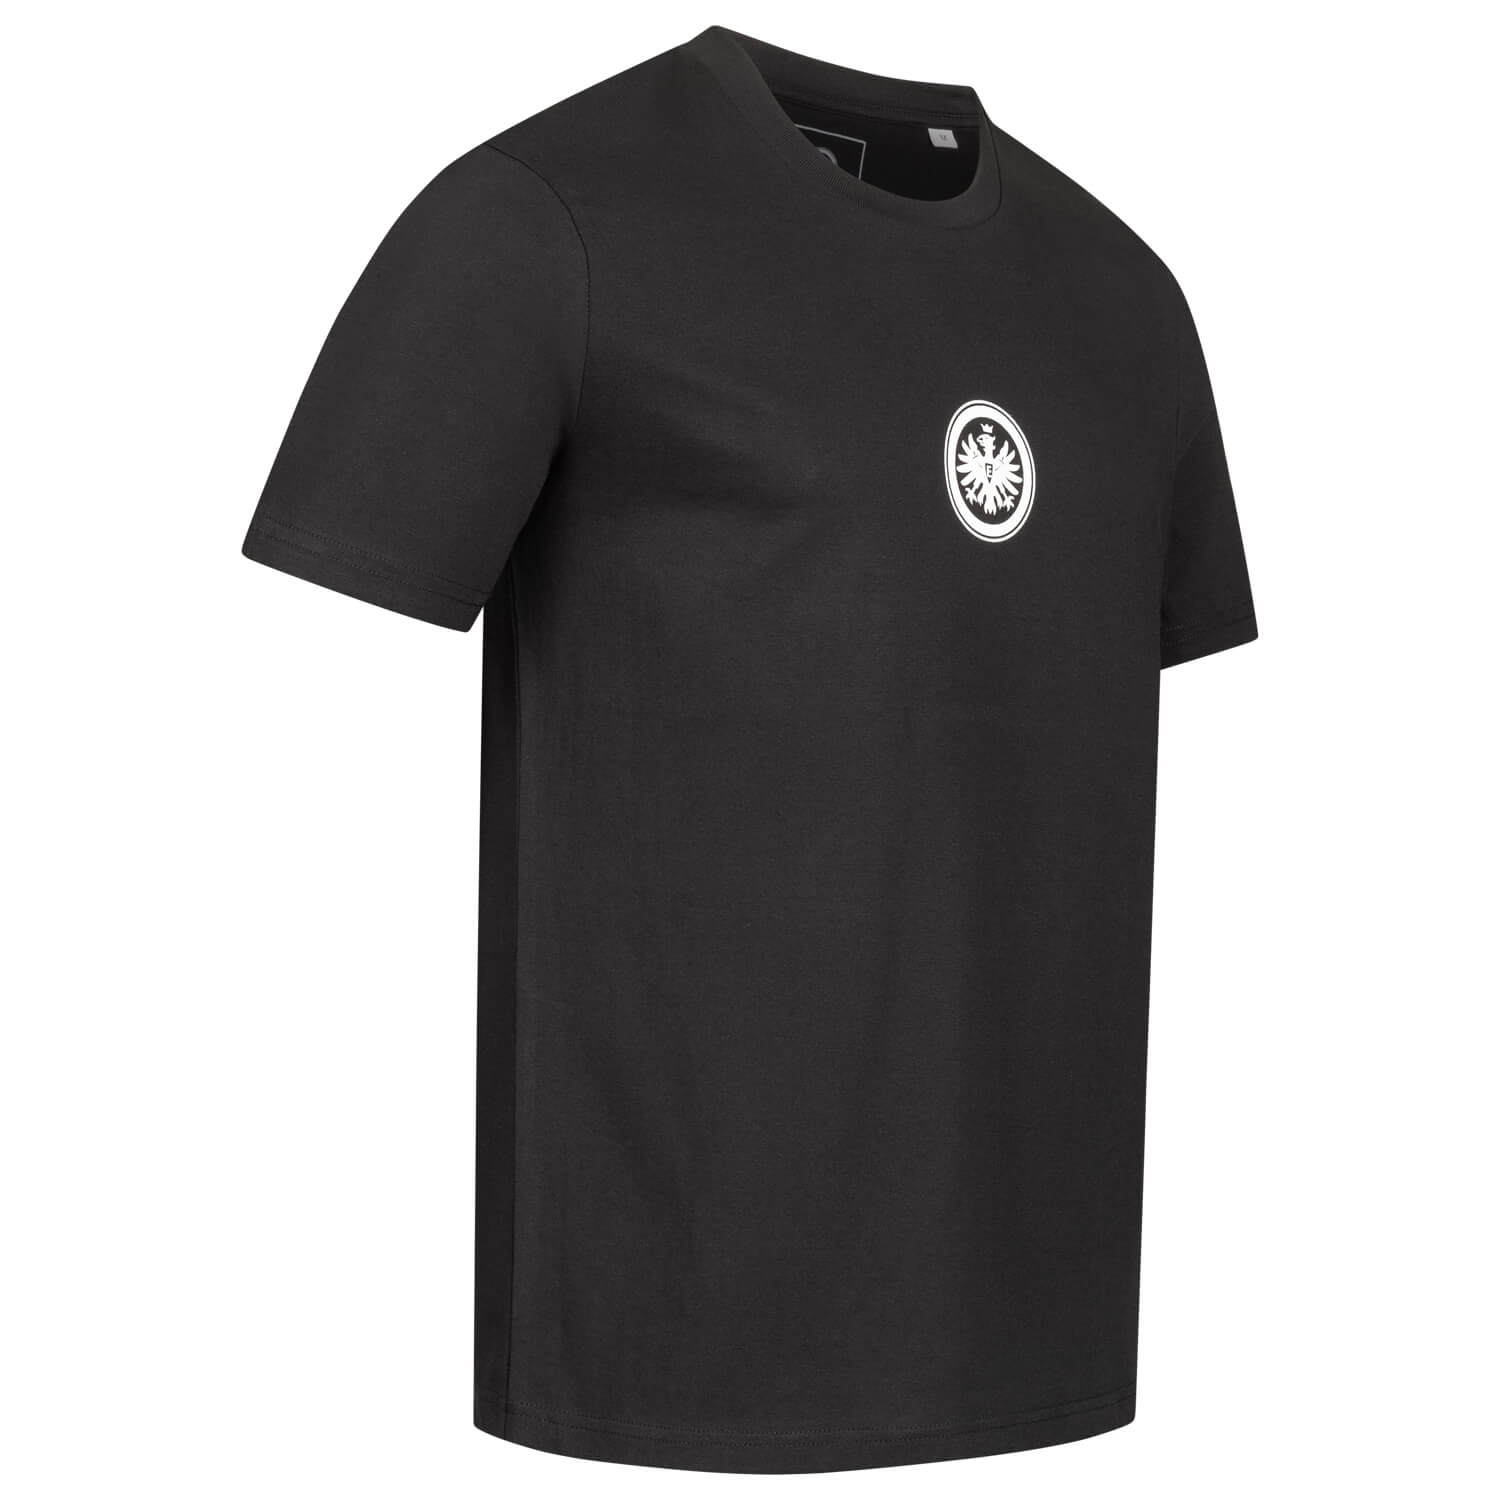 Bild 4: T-Shirt One Club Black